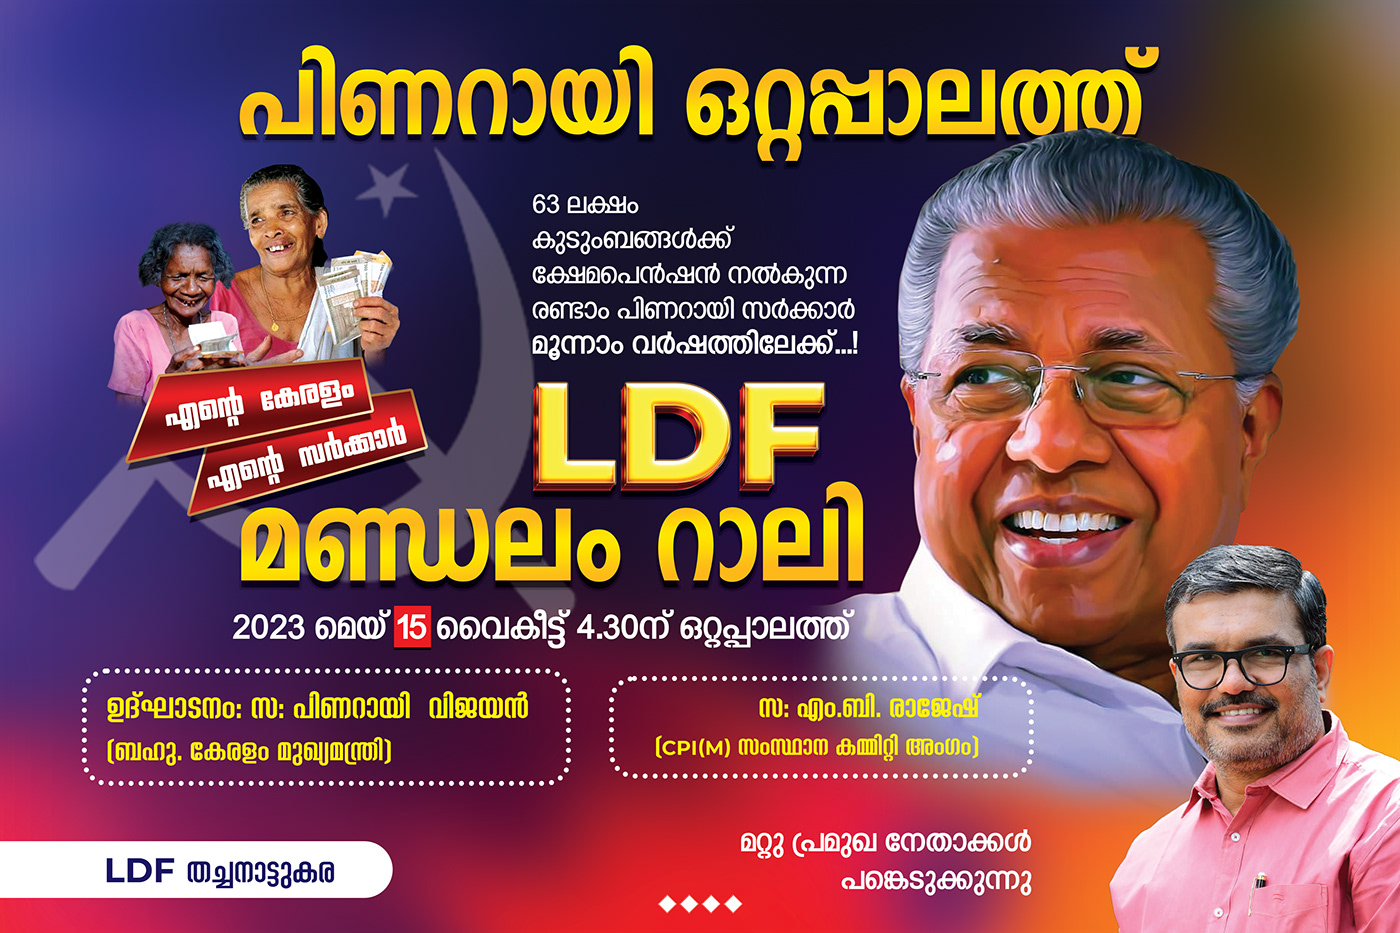 LDF cpim politics kerala pinarayi vijayan comrade malayalam poster banner Social media post